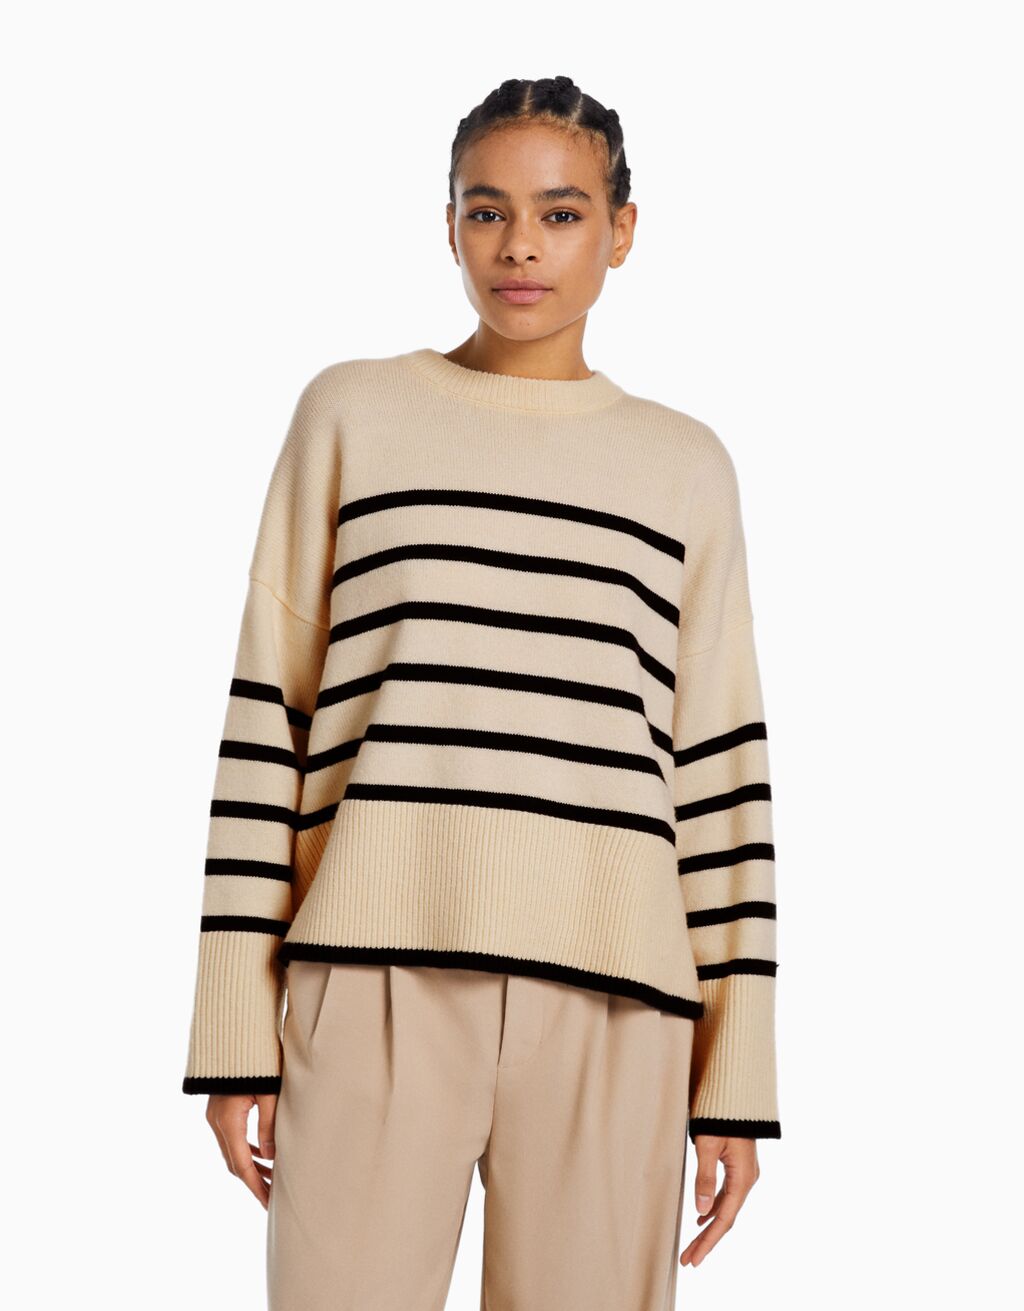 Oversize striped sweater